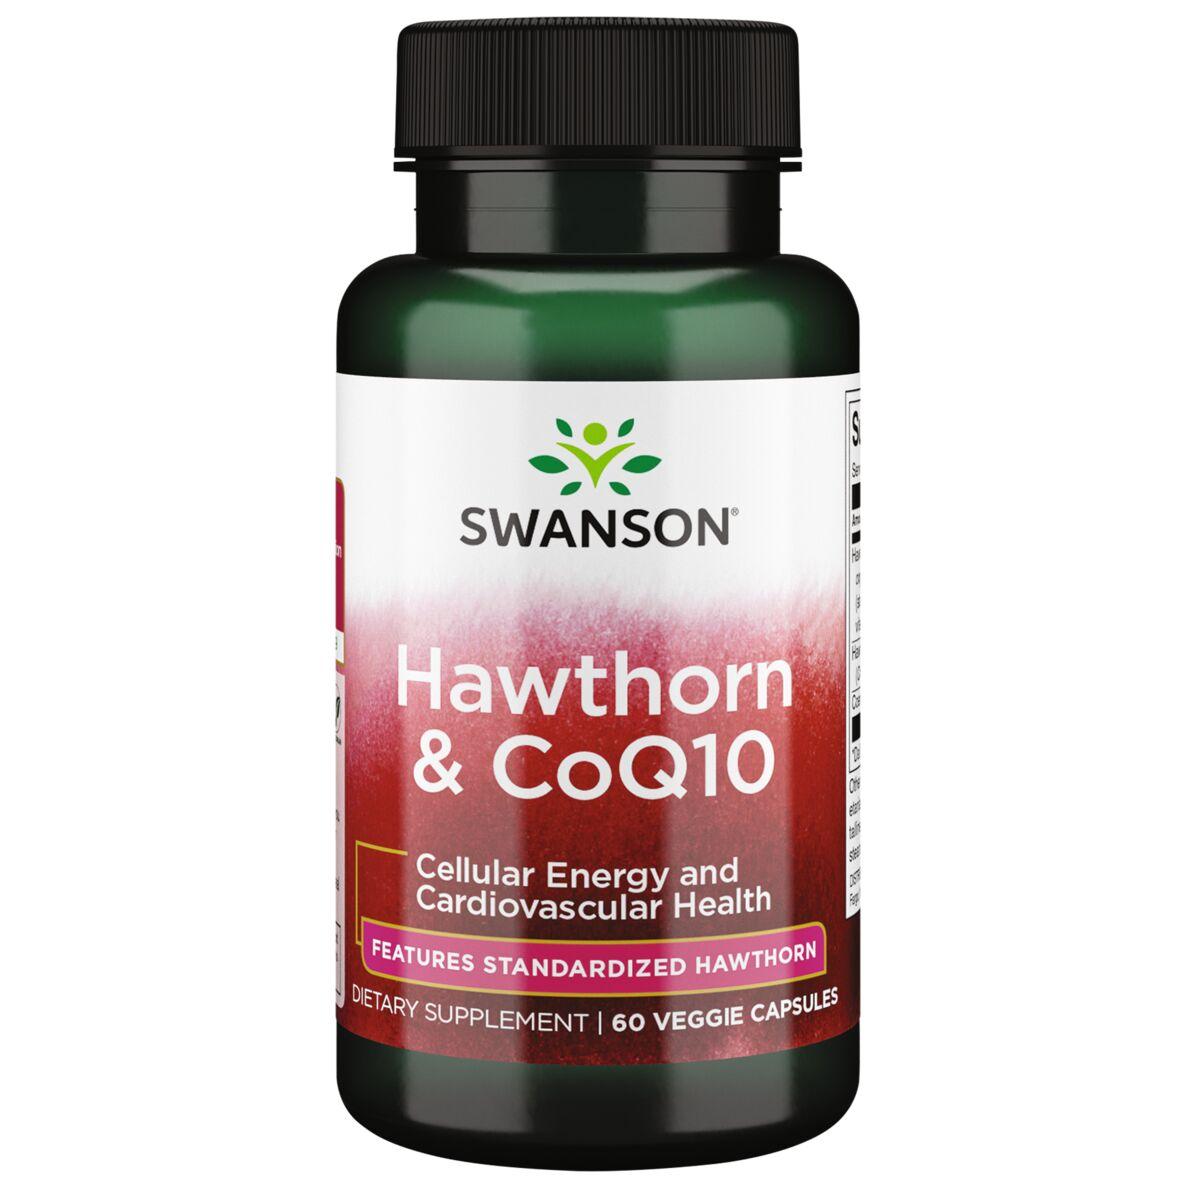 Swanson Ultra Hawthorn & Coq10 - Features Standardized Vitamin | 60 Veg Caps